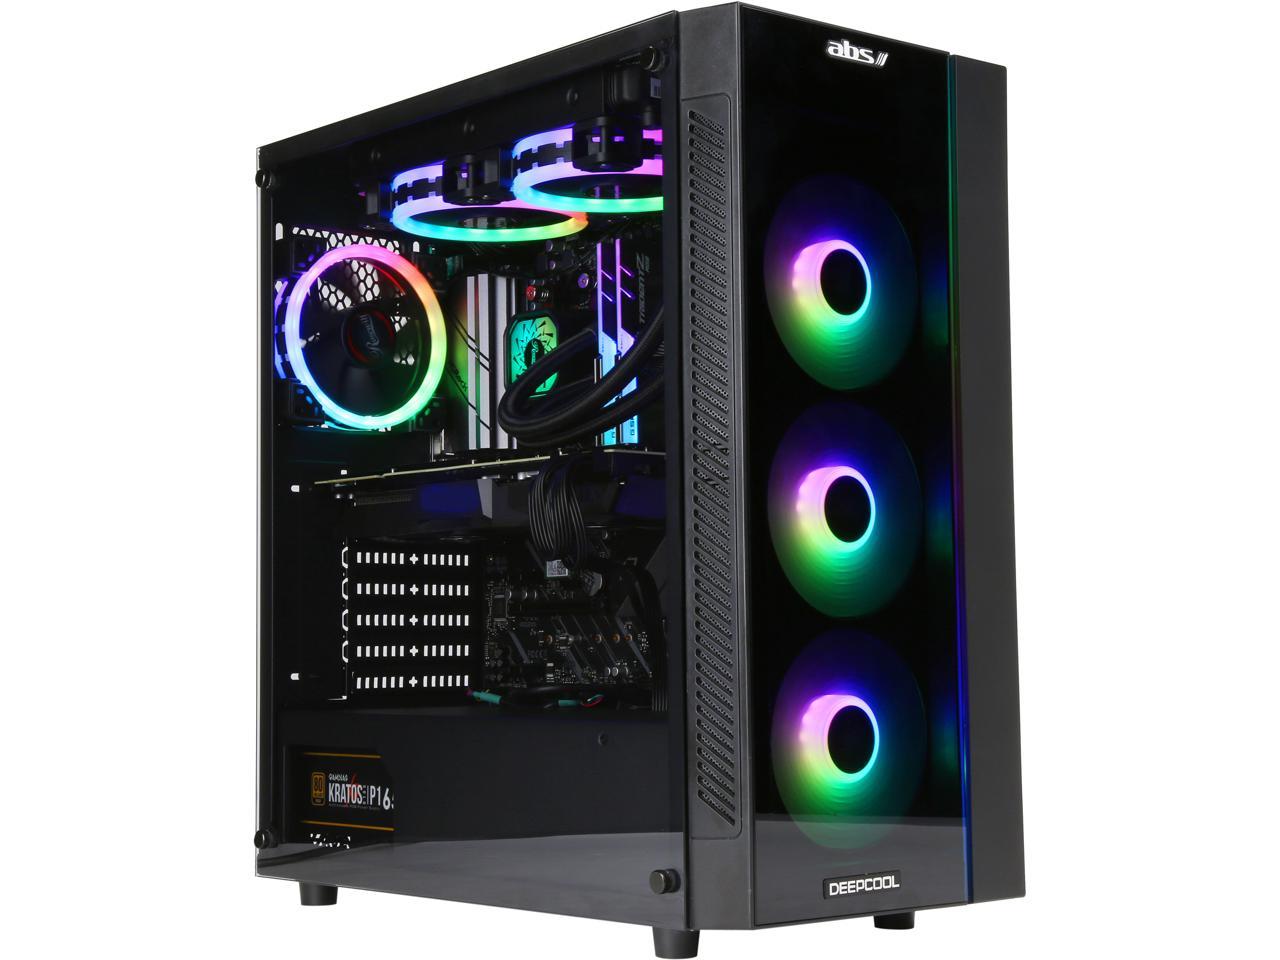 ABS Mage H - Ryzen 9 3900X - GeForce RTX 2080 SUPER - 32GB DDR4 3200MHz - 1TB NVMe SSD - X570 - Liquid Cooling (240mm) - Gaming Desktop PC